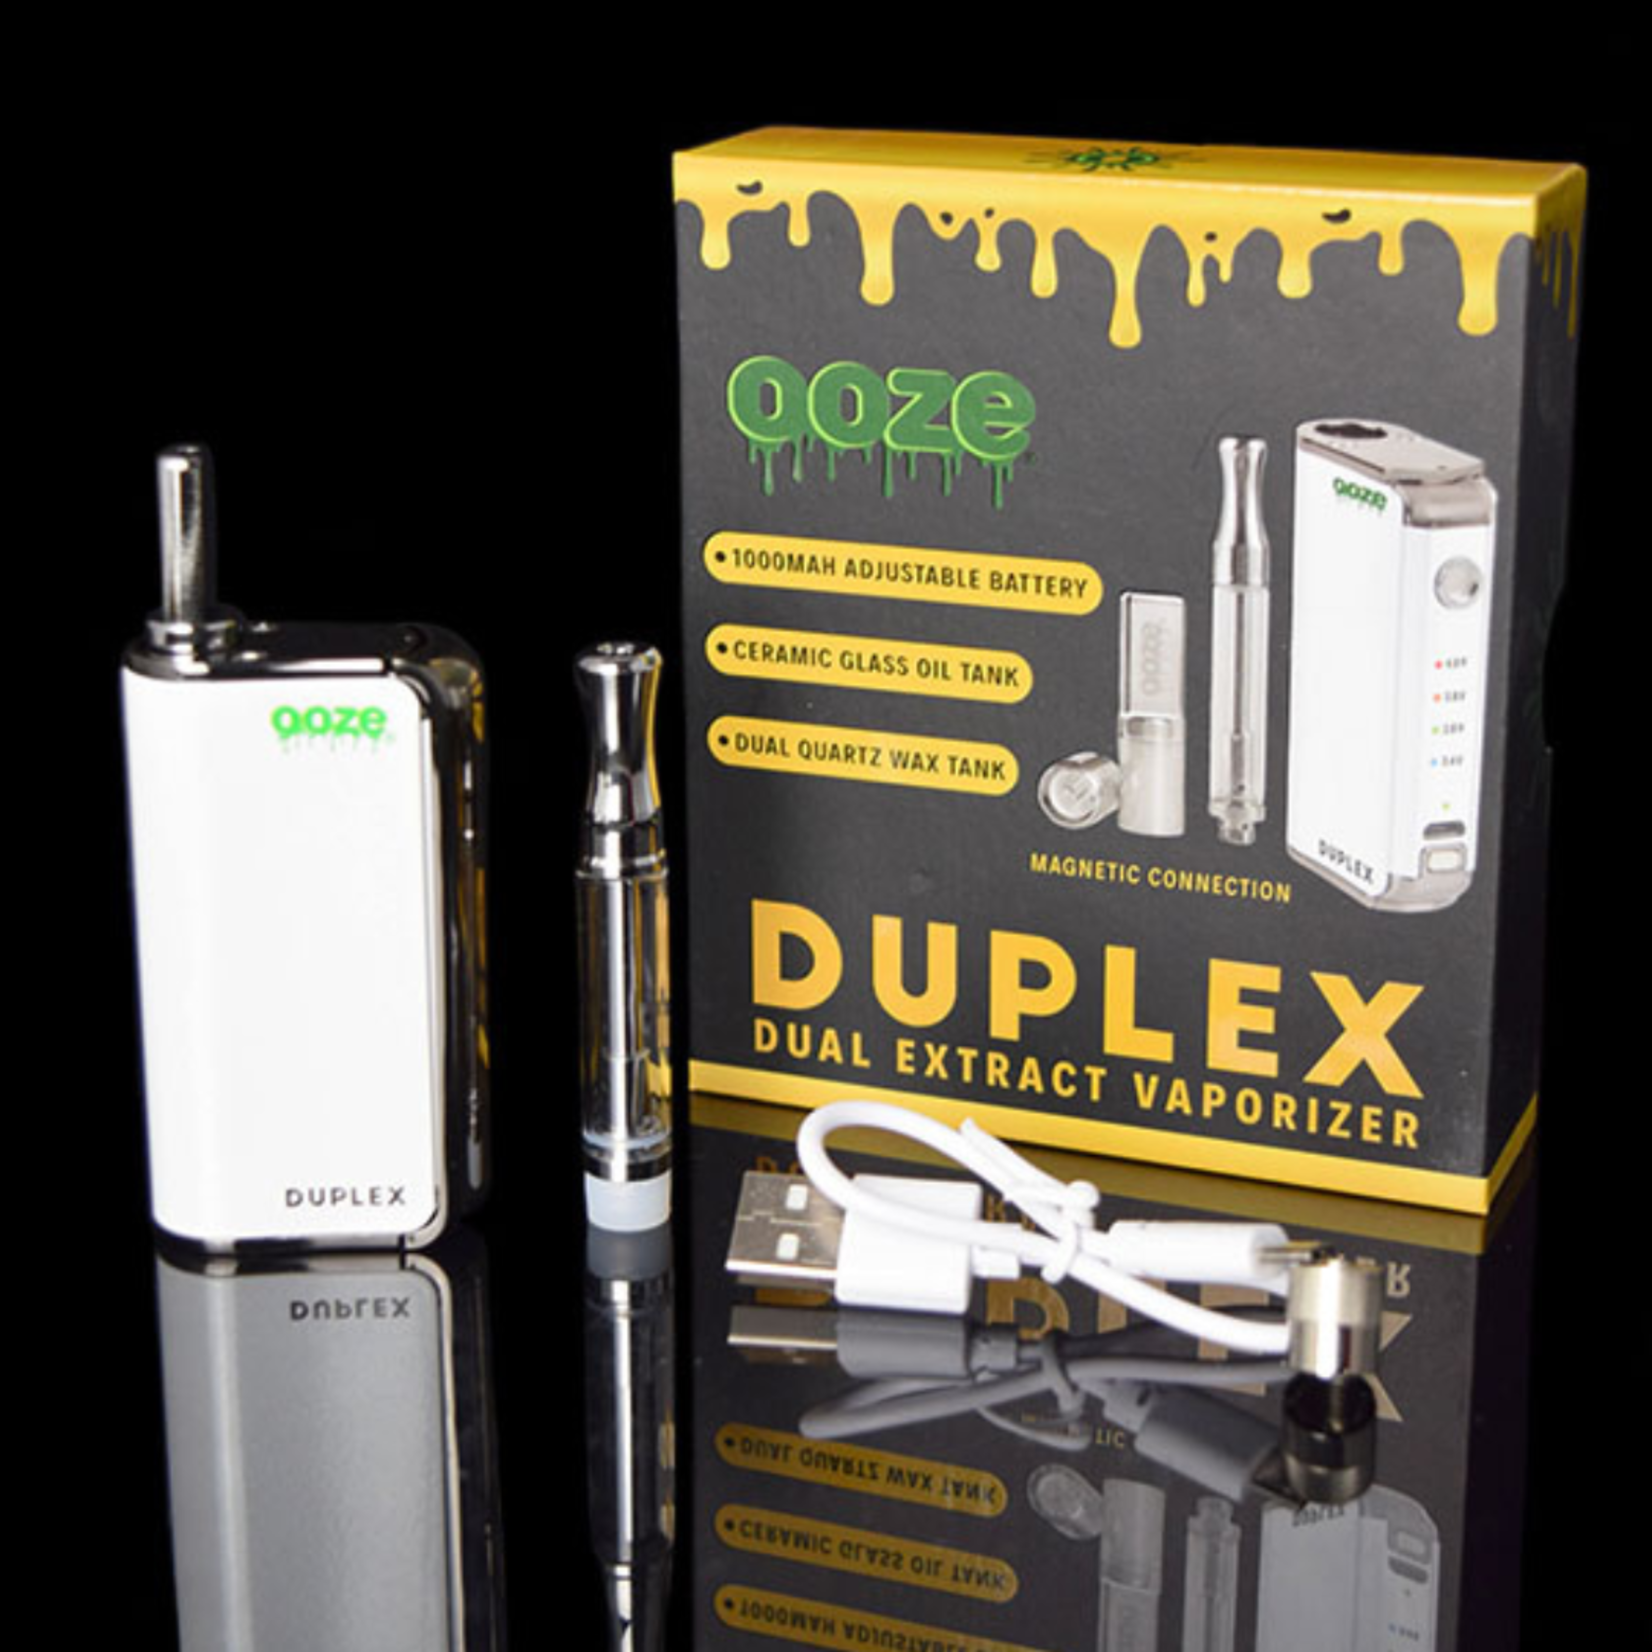 Ooze Ooze Duplex Dual Extract Vaporizer